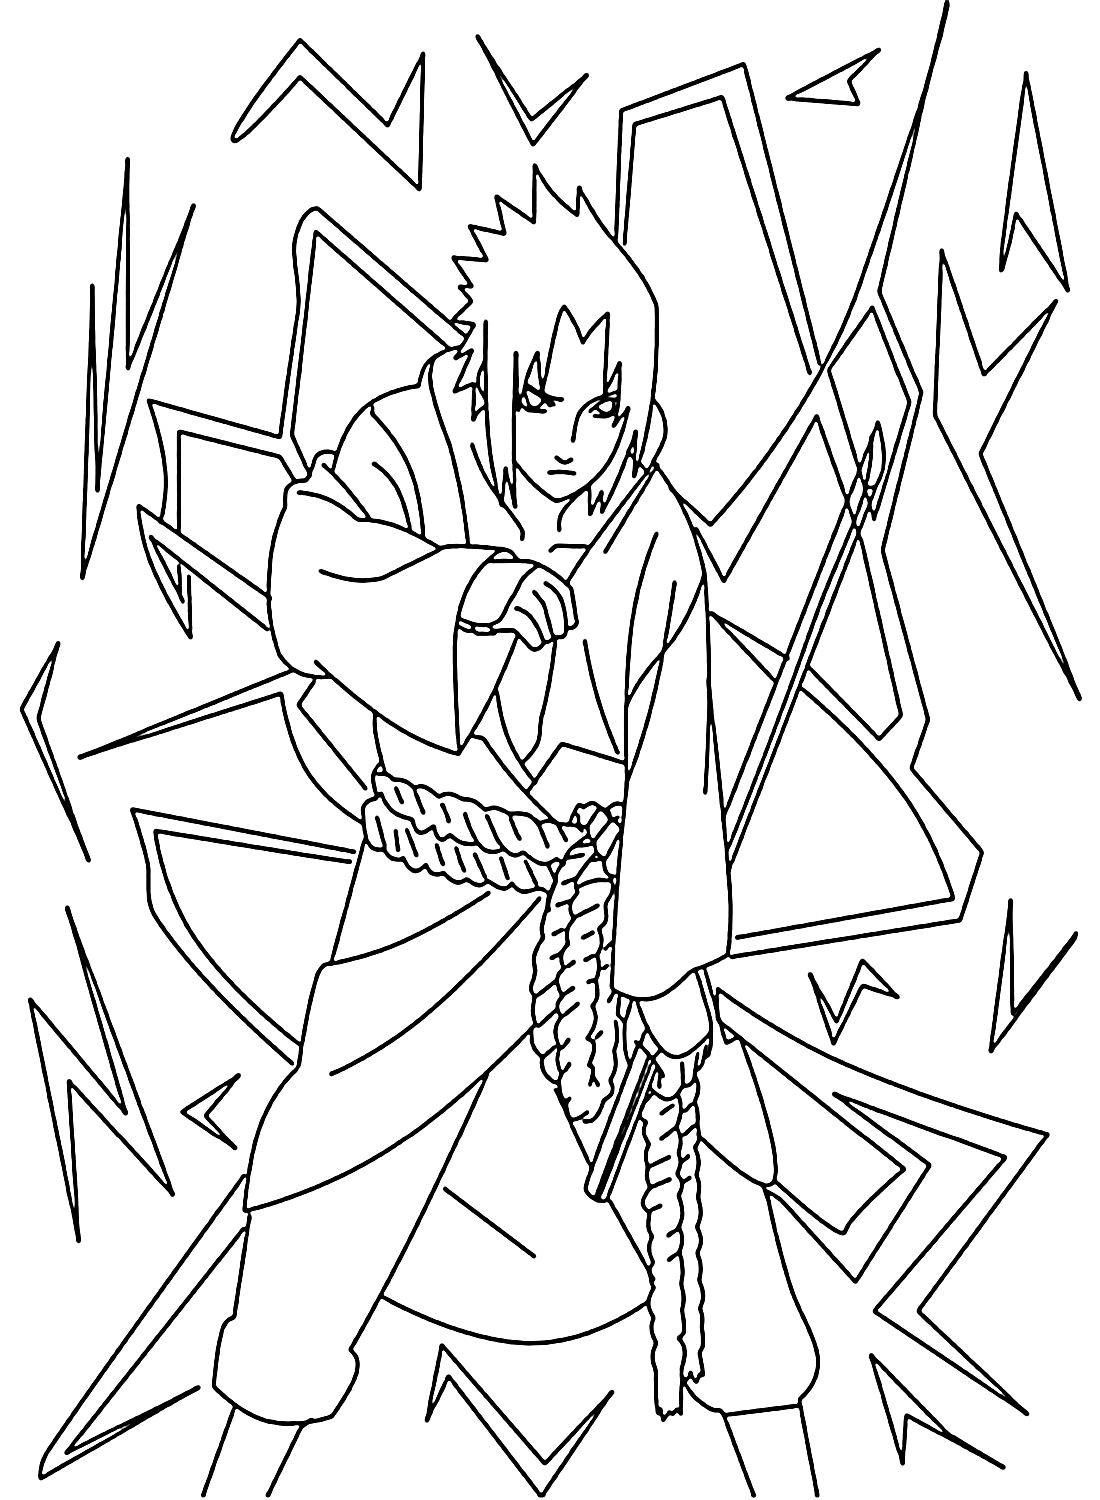 Sasuke in Battle Coloring Pages from Sasuke